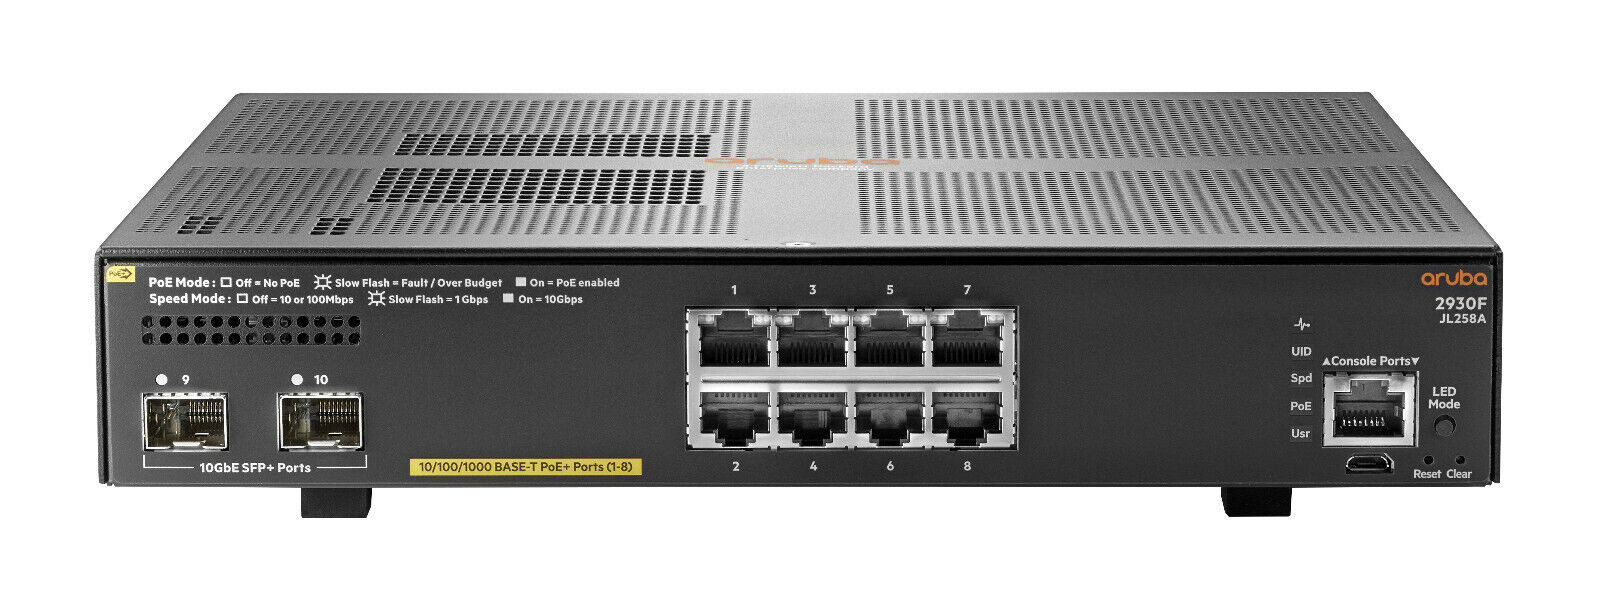 HPE JL258A Aruba 2930F 8G PoE+ 2SFP+ Ethernet Switch